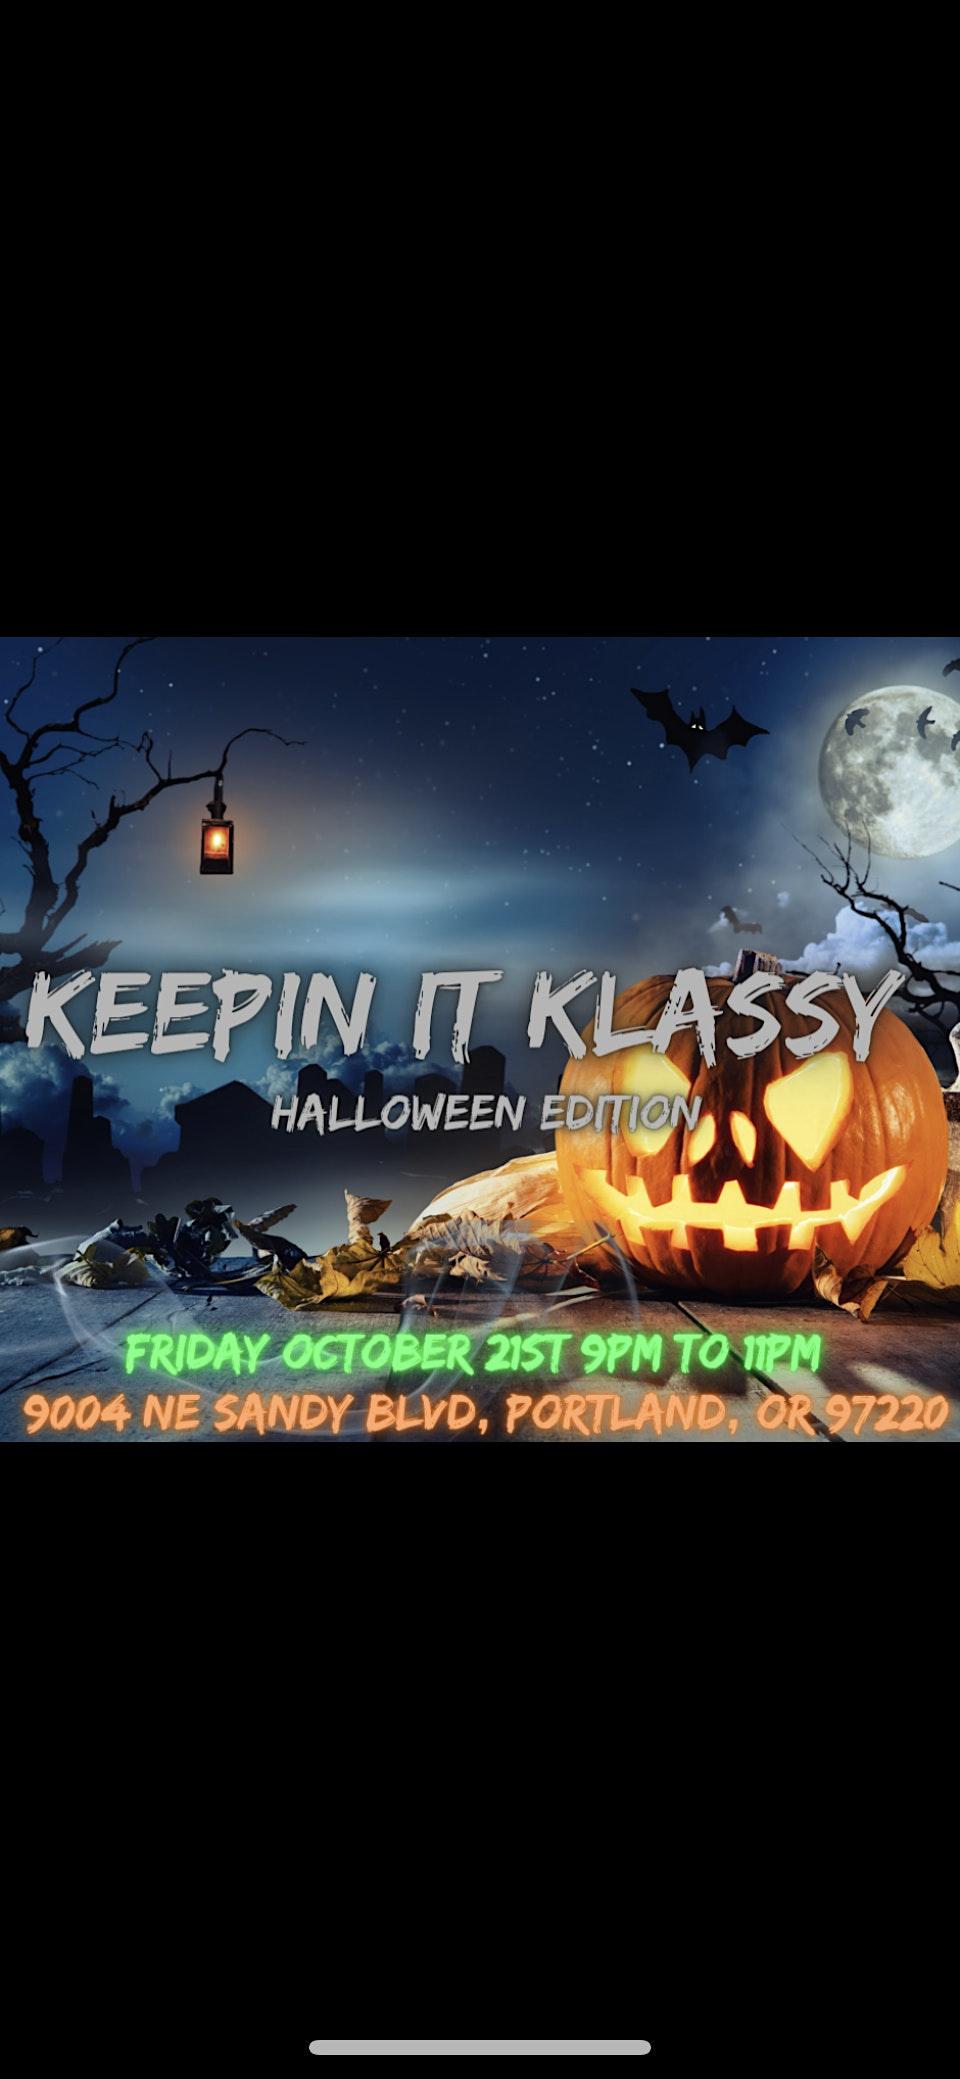 Keepin' it Klassy ; Halloween Drag and Comedy Show
Fri Oct 21, 9:00 PM - Fri Oct 21, 11:30 PM
in 2 days